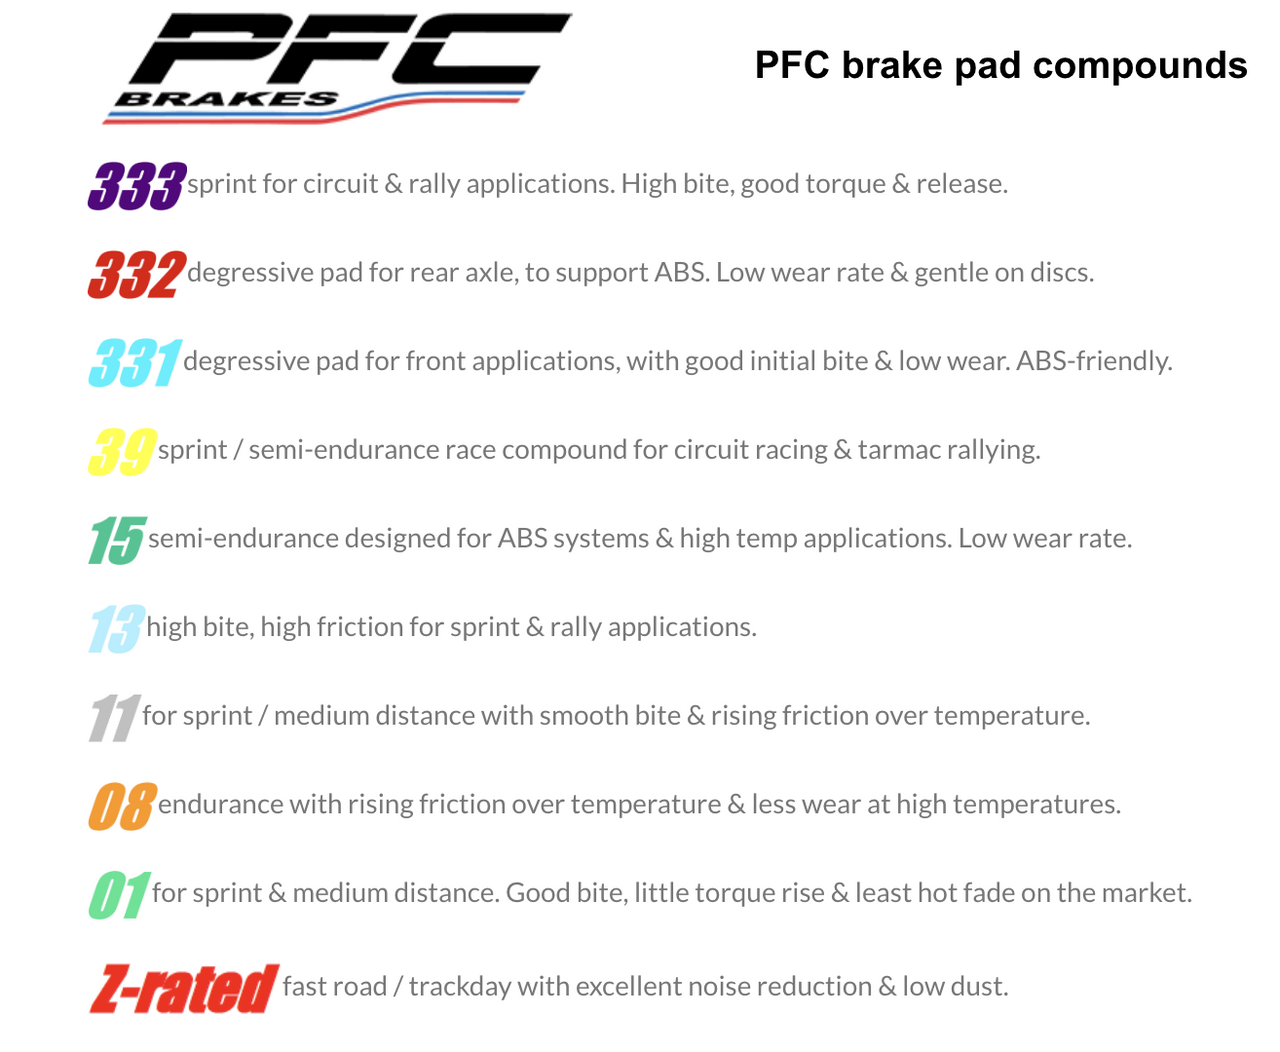 PFC Brake Pad 0919.08.16.44 Compound Summary Image